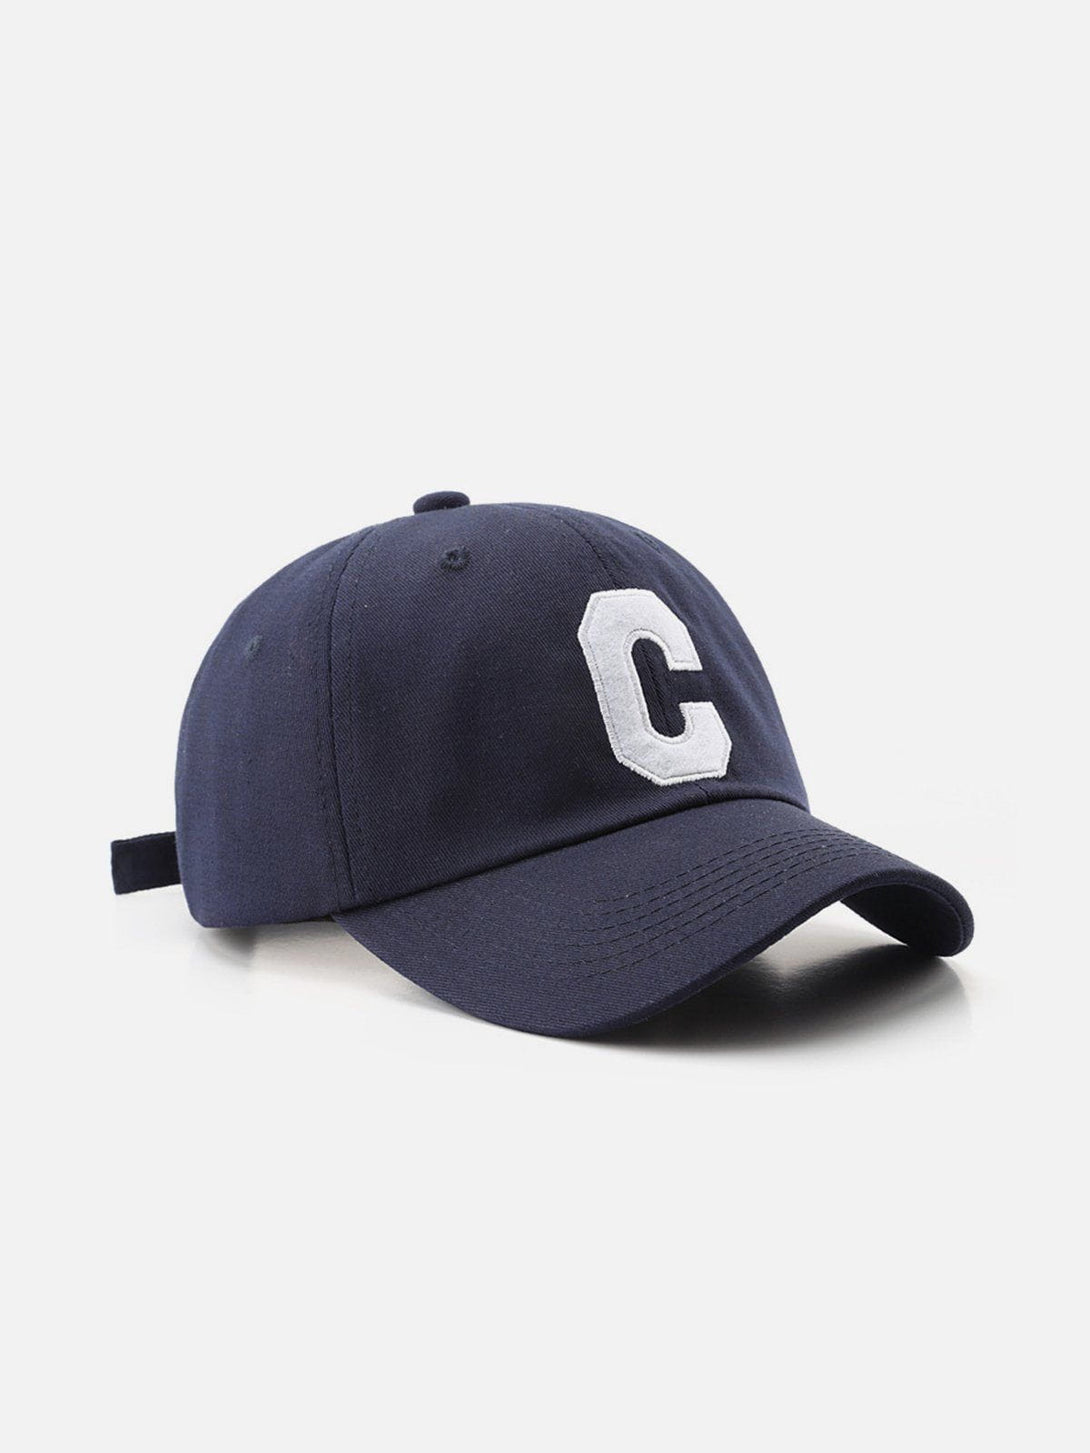 Levefly - Vintage Letter "C" Baseball Cap - Streetwear Fashion - levefly.com